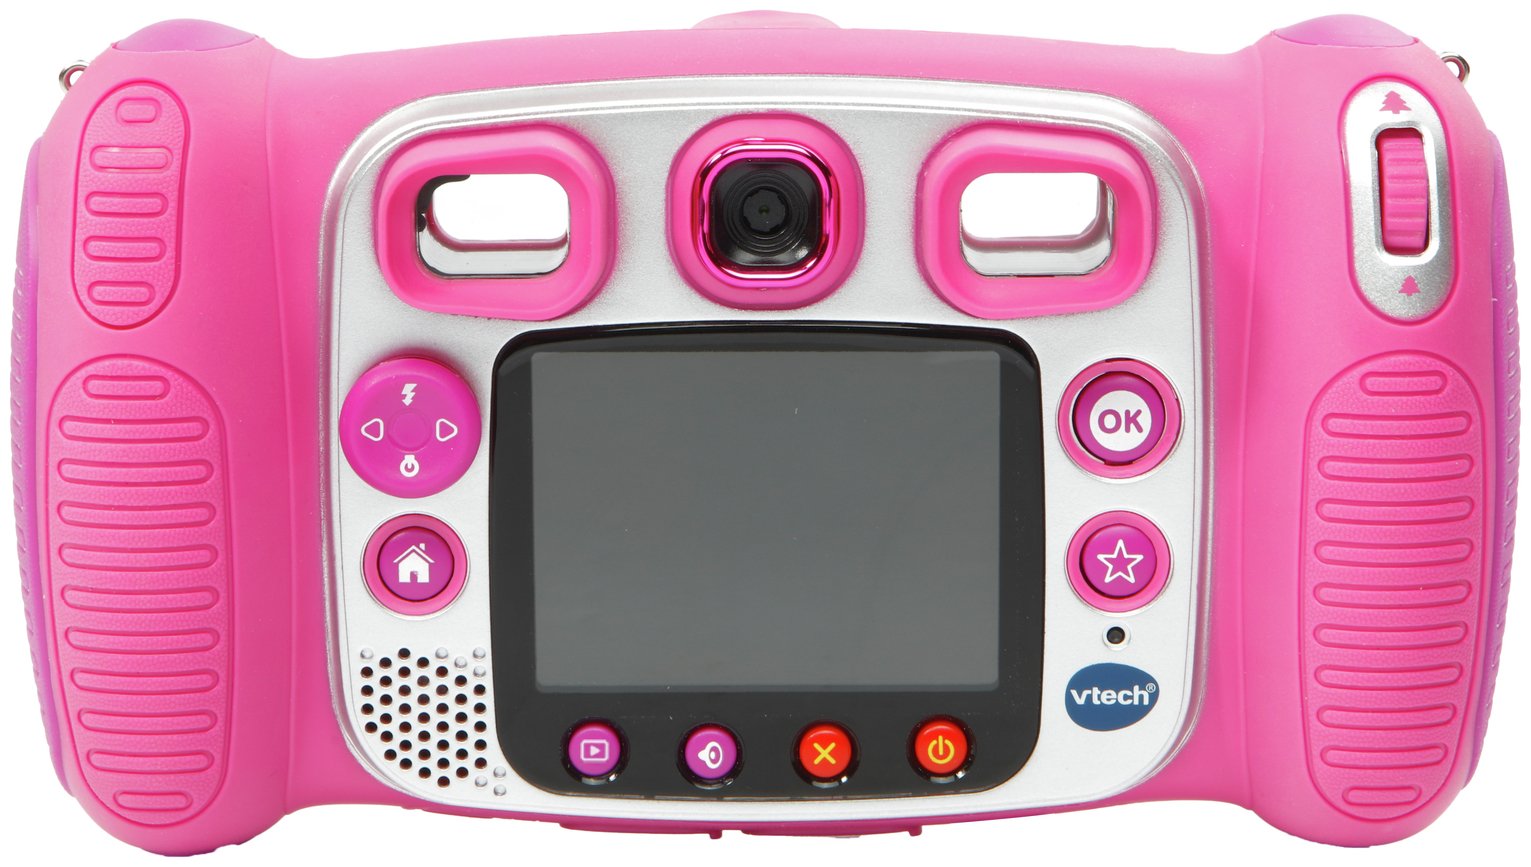 Buy Vtech Kidizoom 5MP Camera - Pink